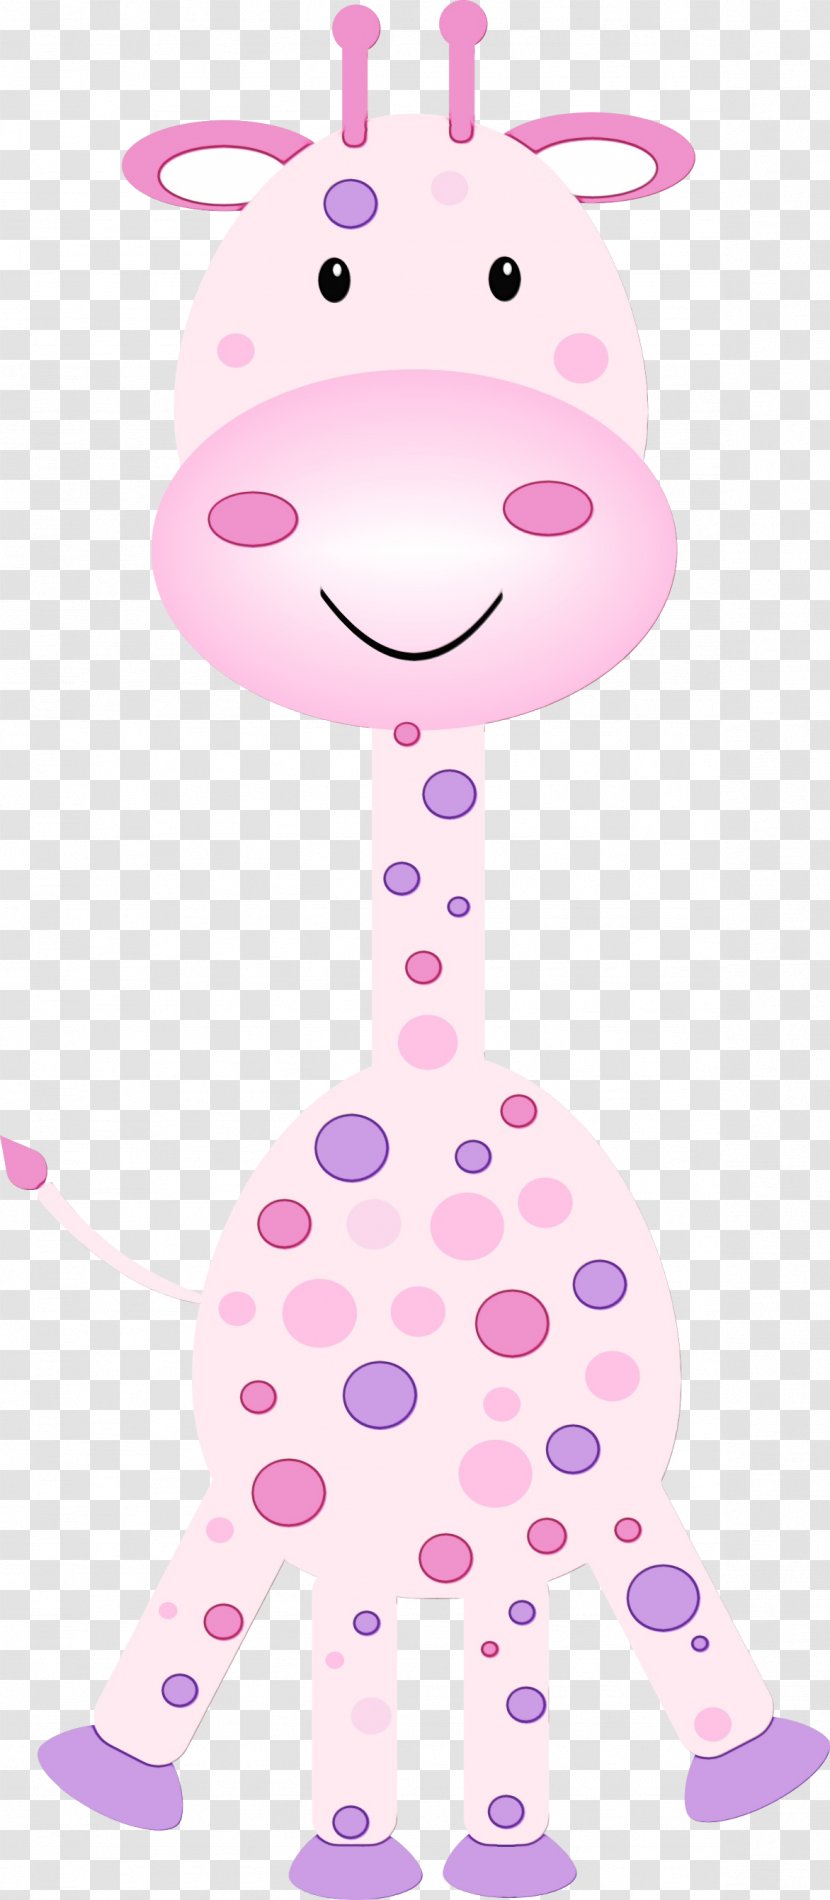 Baby Toys - Paint - Magenta Polka Dot Transparent PNG